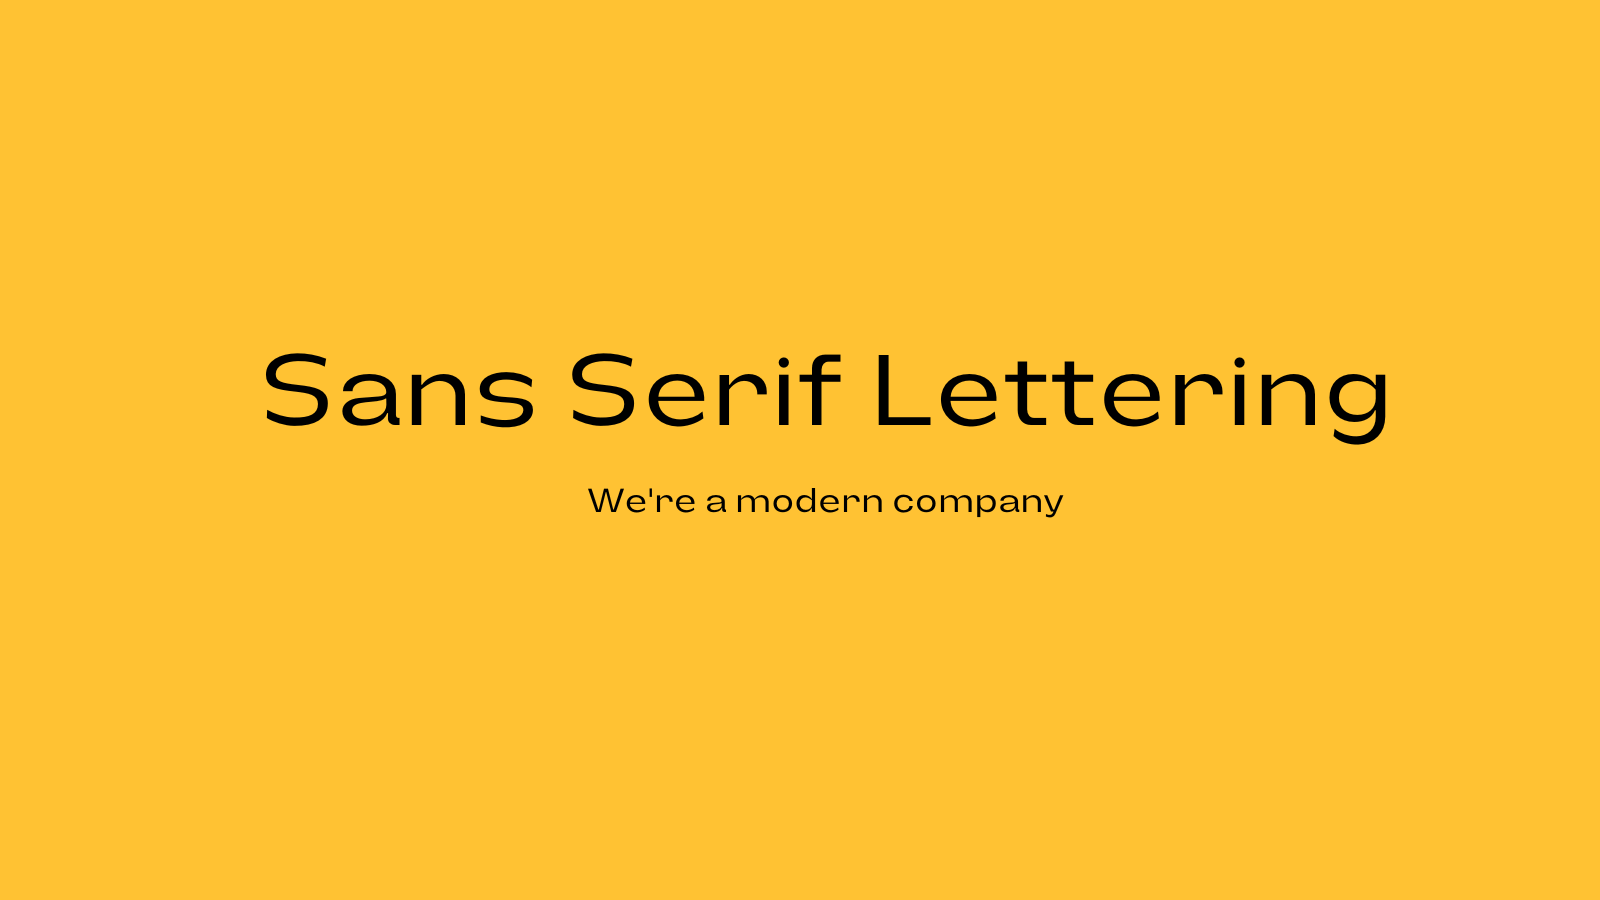 "Sans Serif Lettering: We're a modern company" in a sans serif font